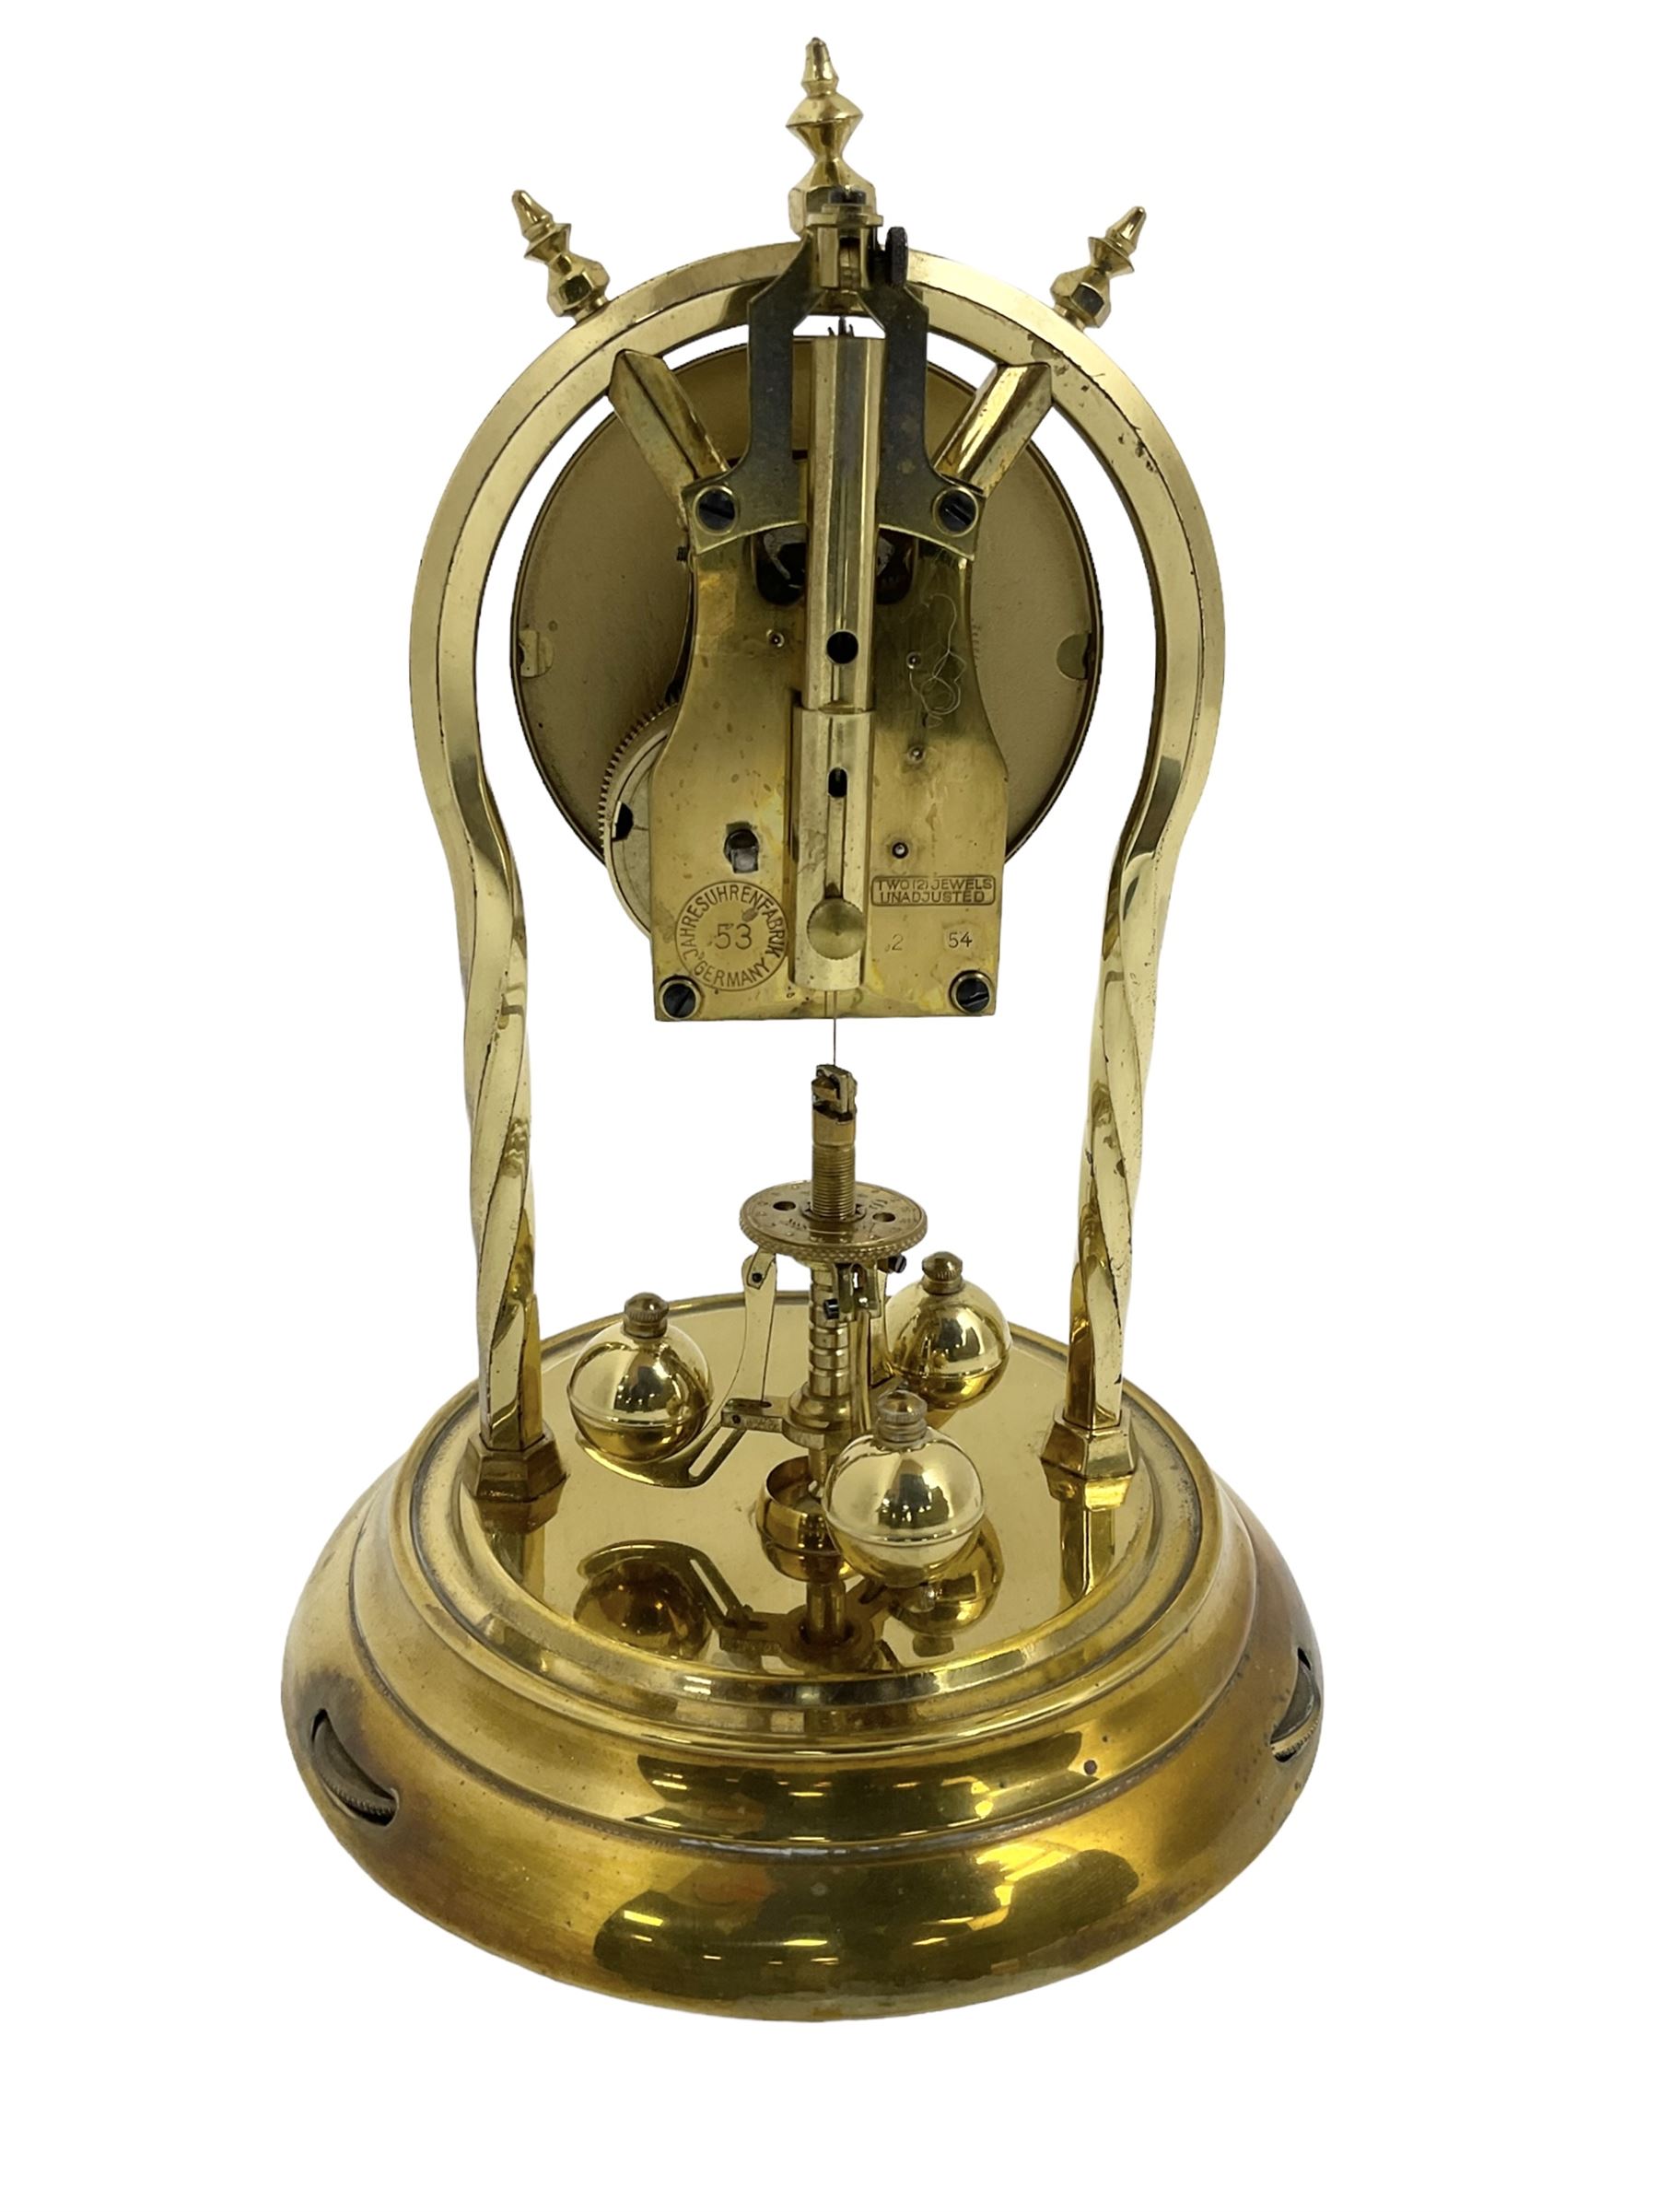 Schatz - mid-20th century German 400 day torsion clock - Image 3 of 3